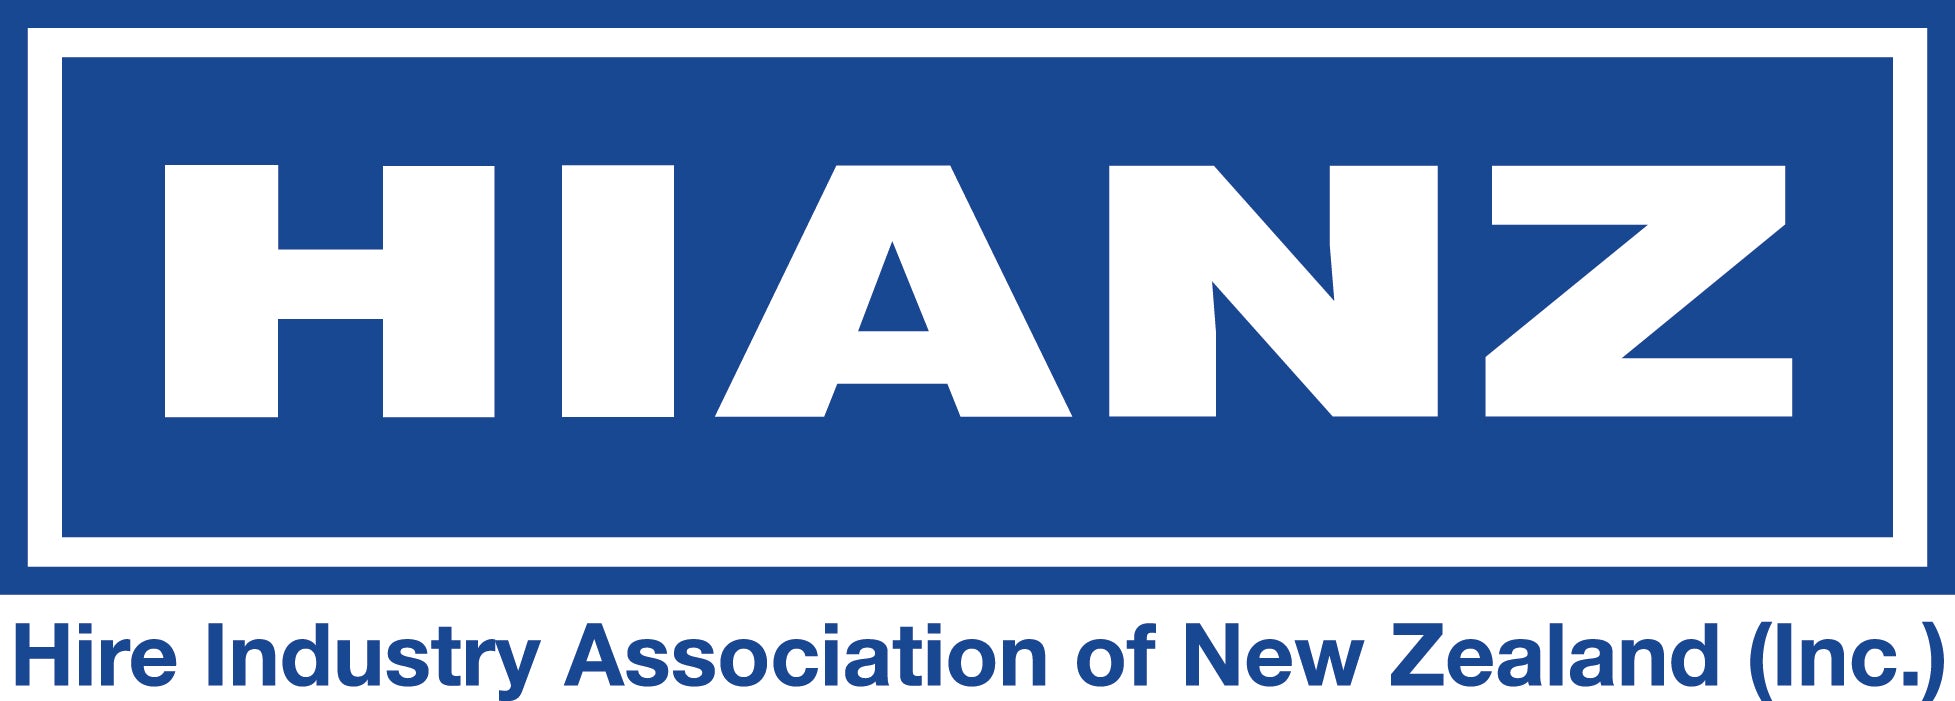 HIANZ Logo